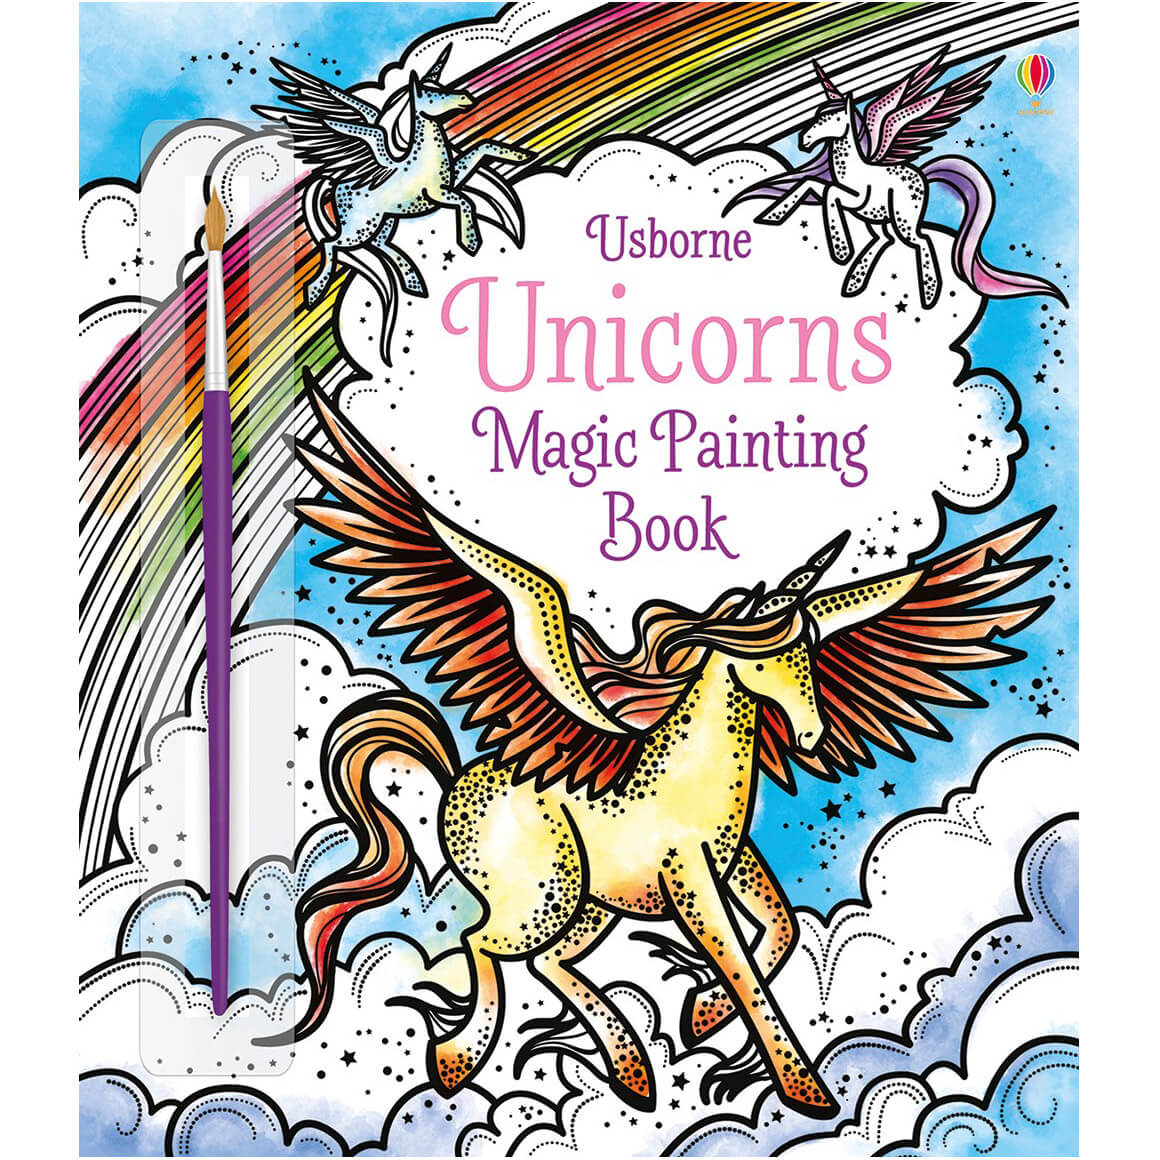 Usborne Magic Painting Book Unicorns (Magic Painting Books)